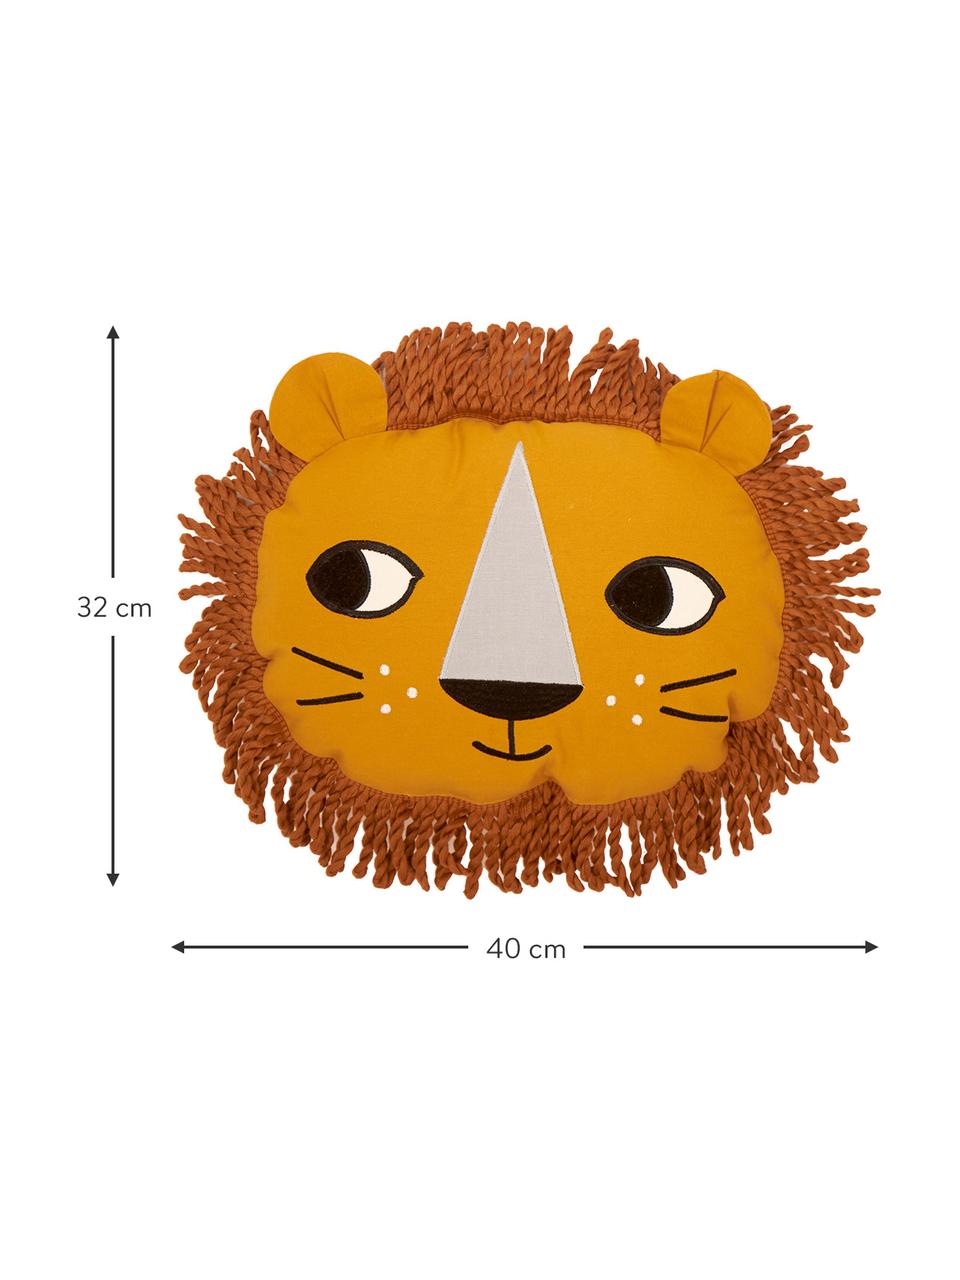 Kussen Lion, met vulling, Geel, oranje, B 30 x L 40 cm